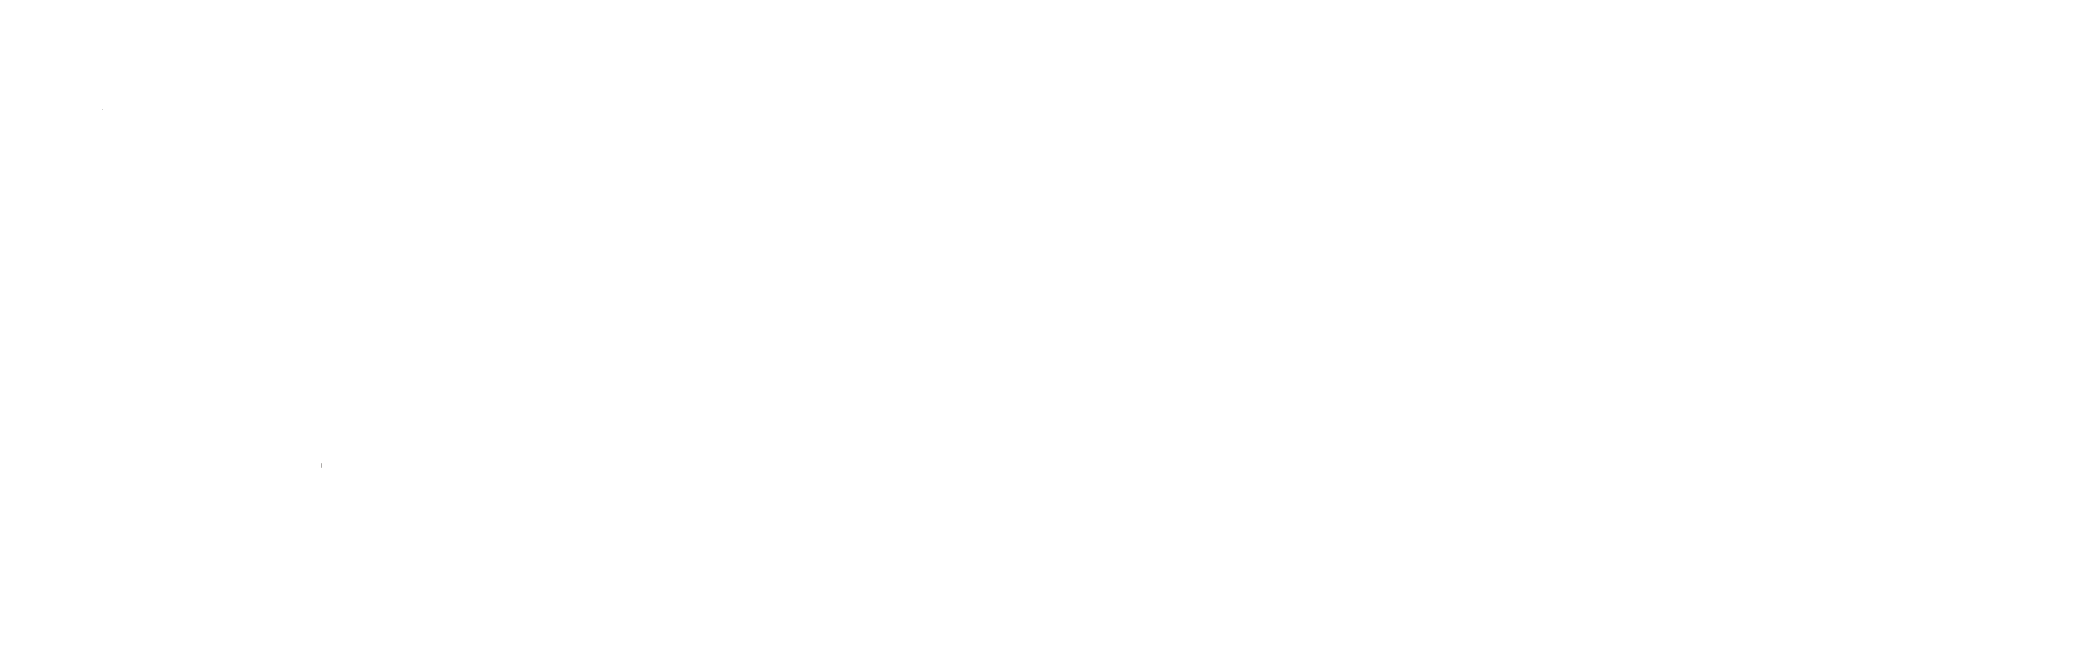 Epoxy Foxy 1 color (white).png